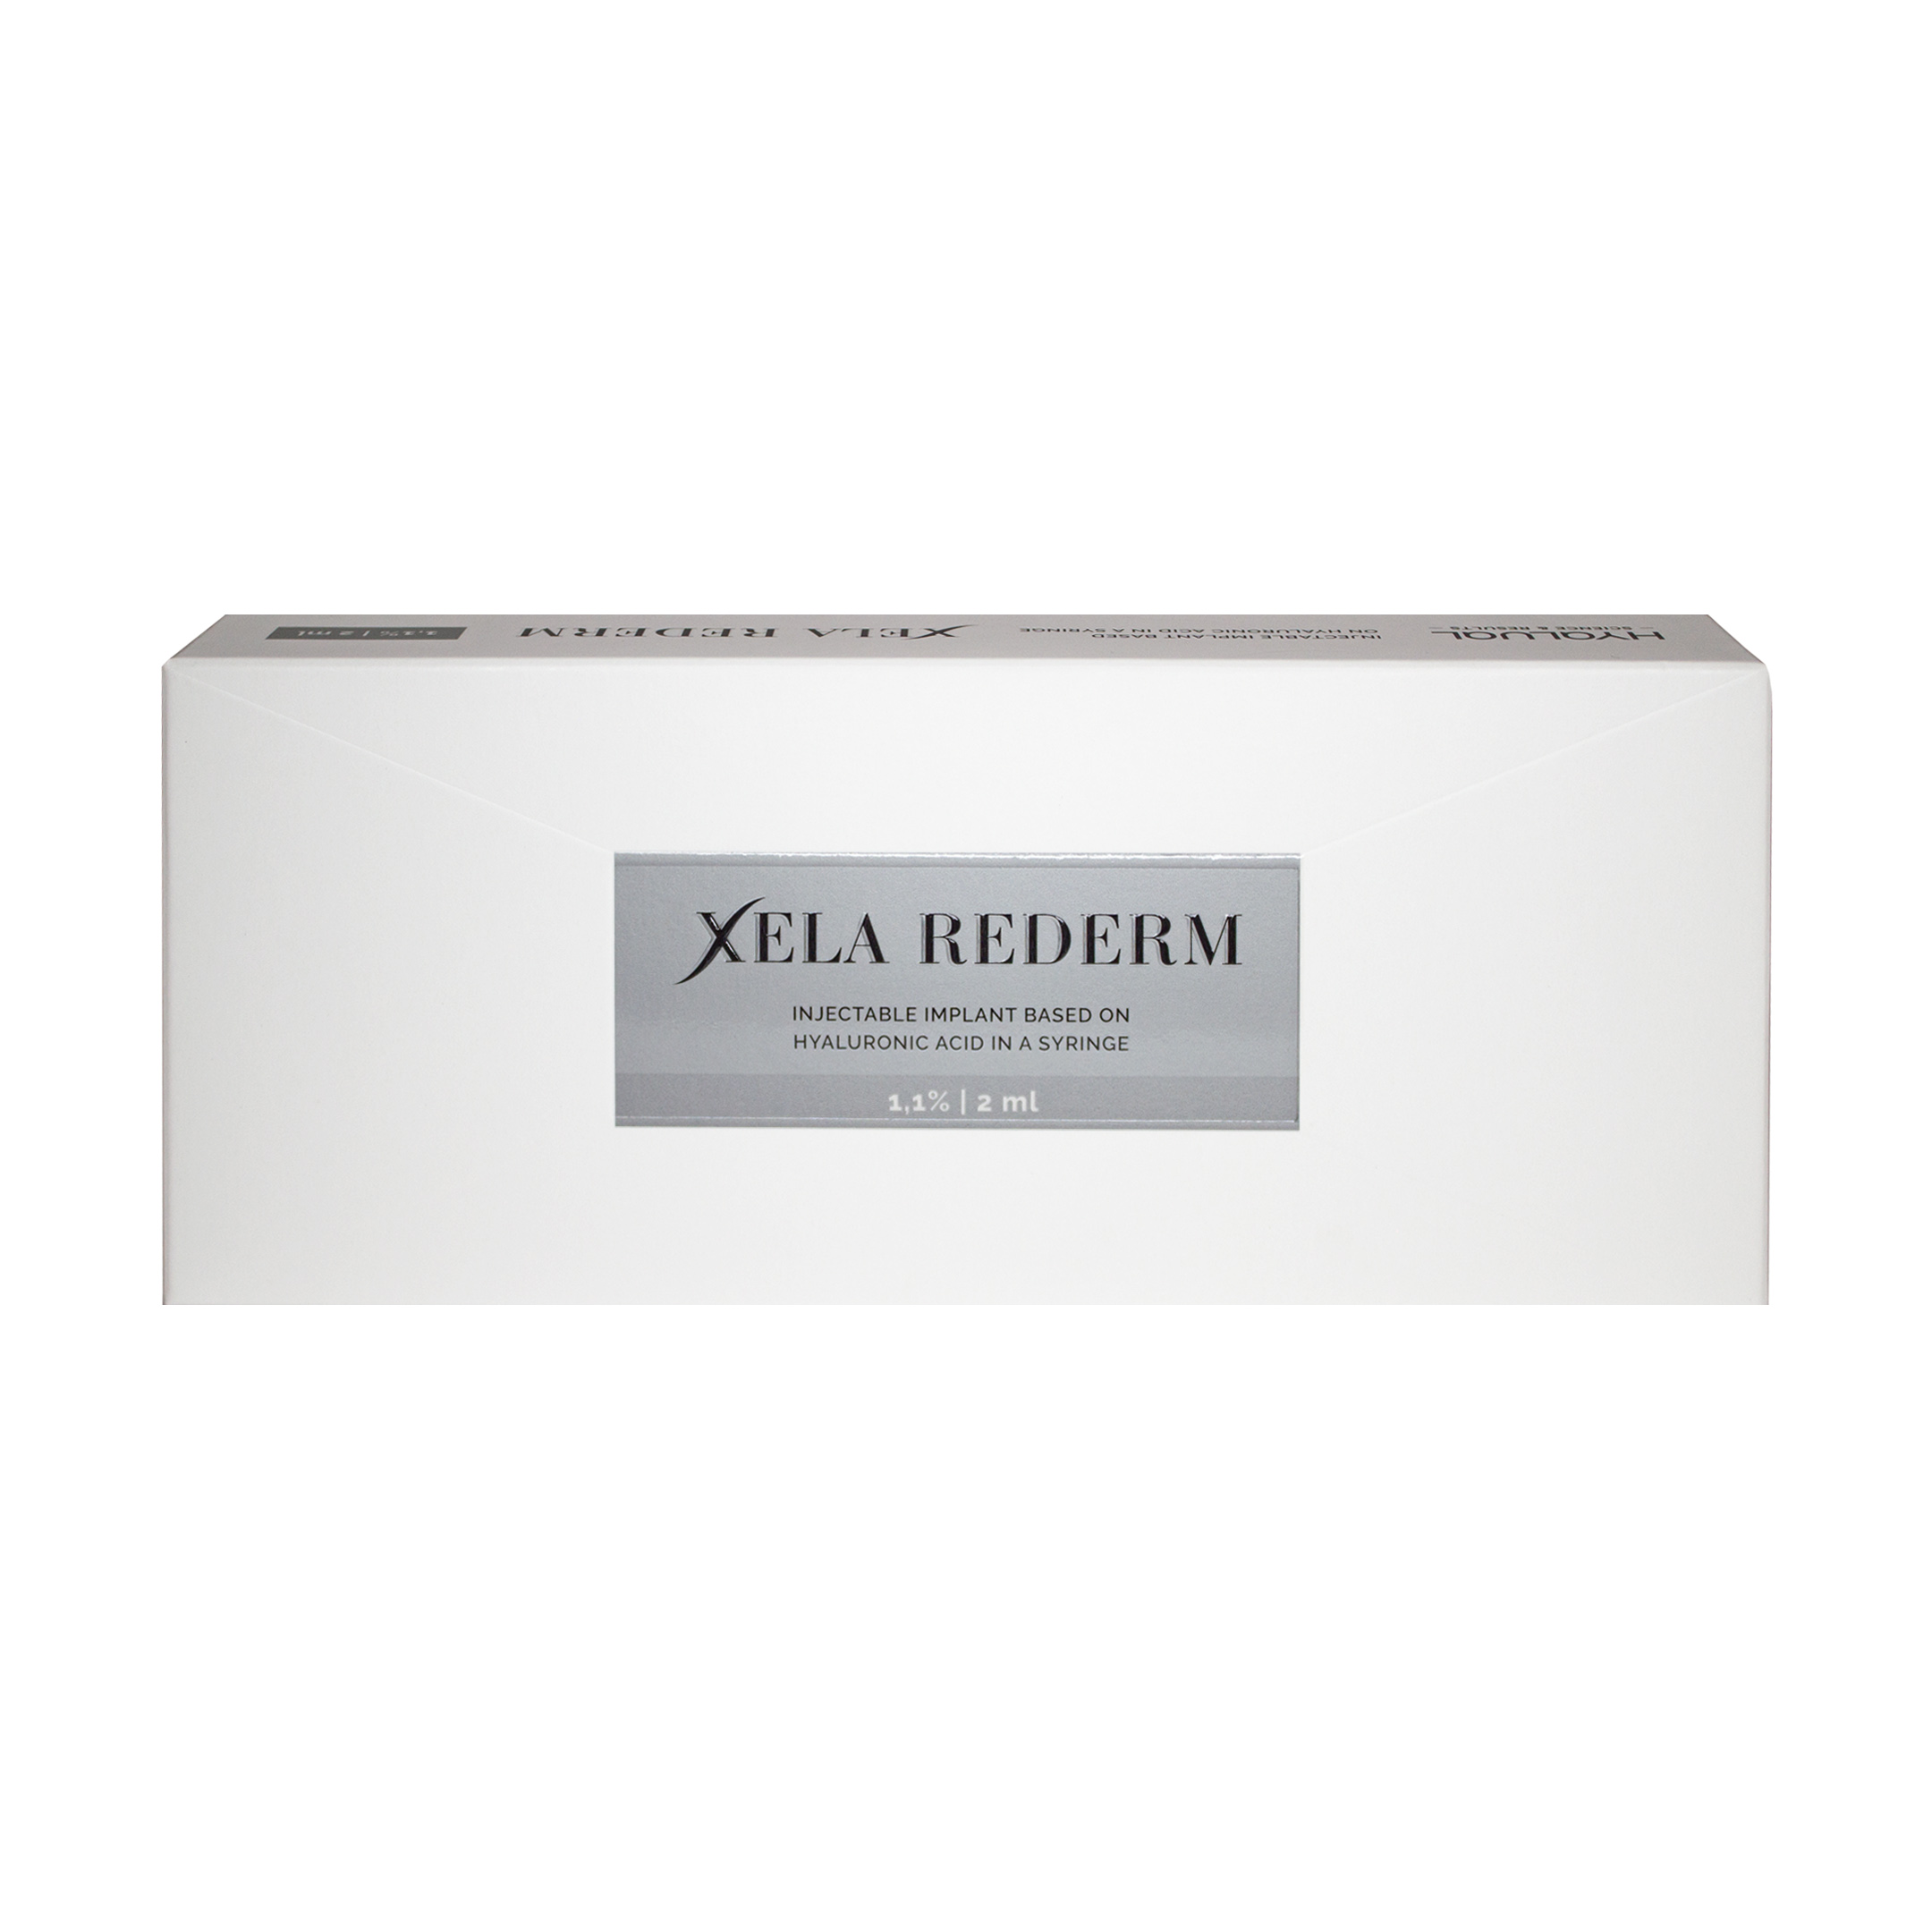 Xela Rederm 1 1 2ml front